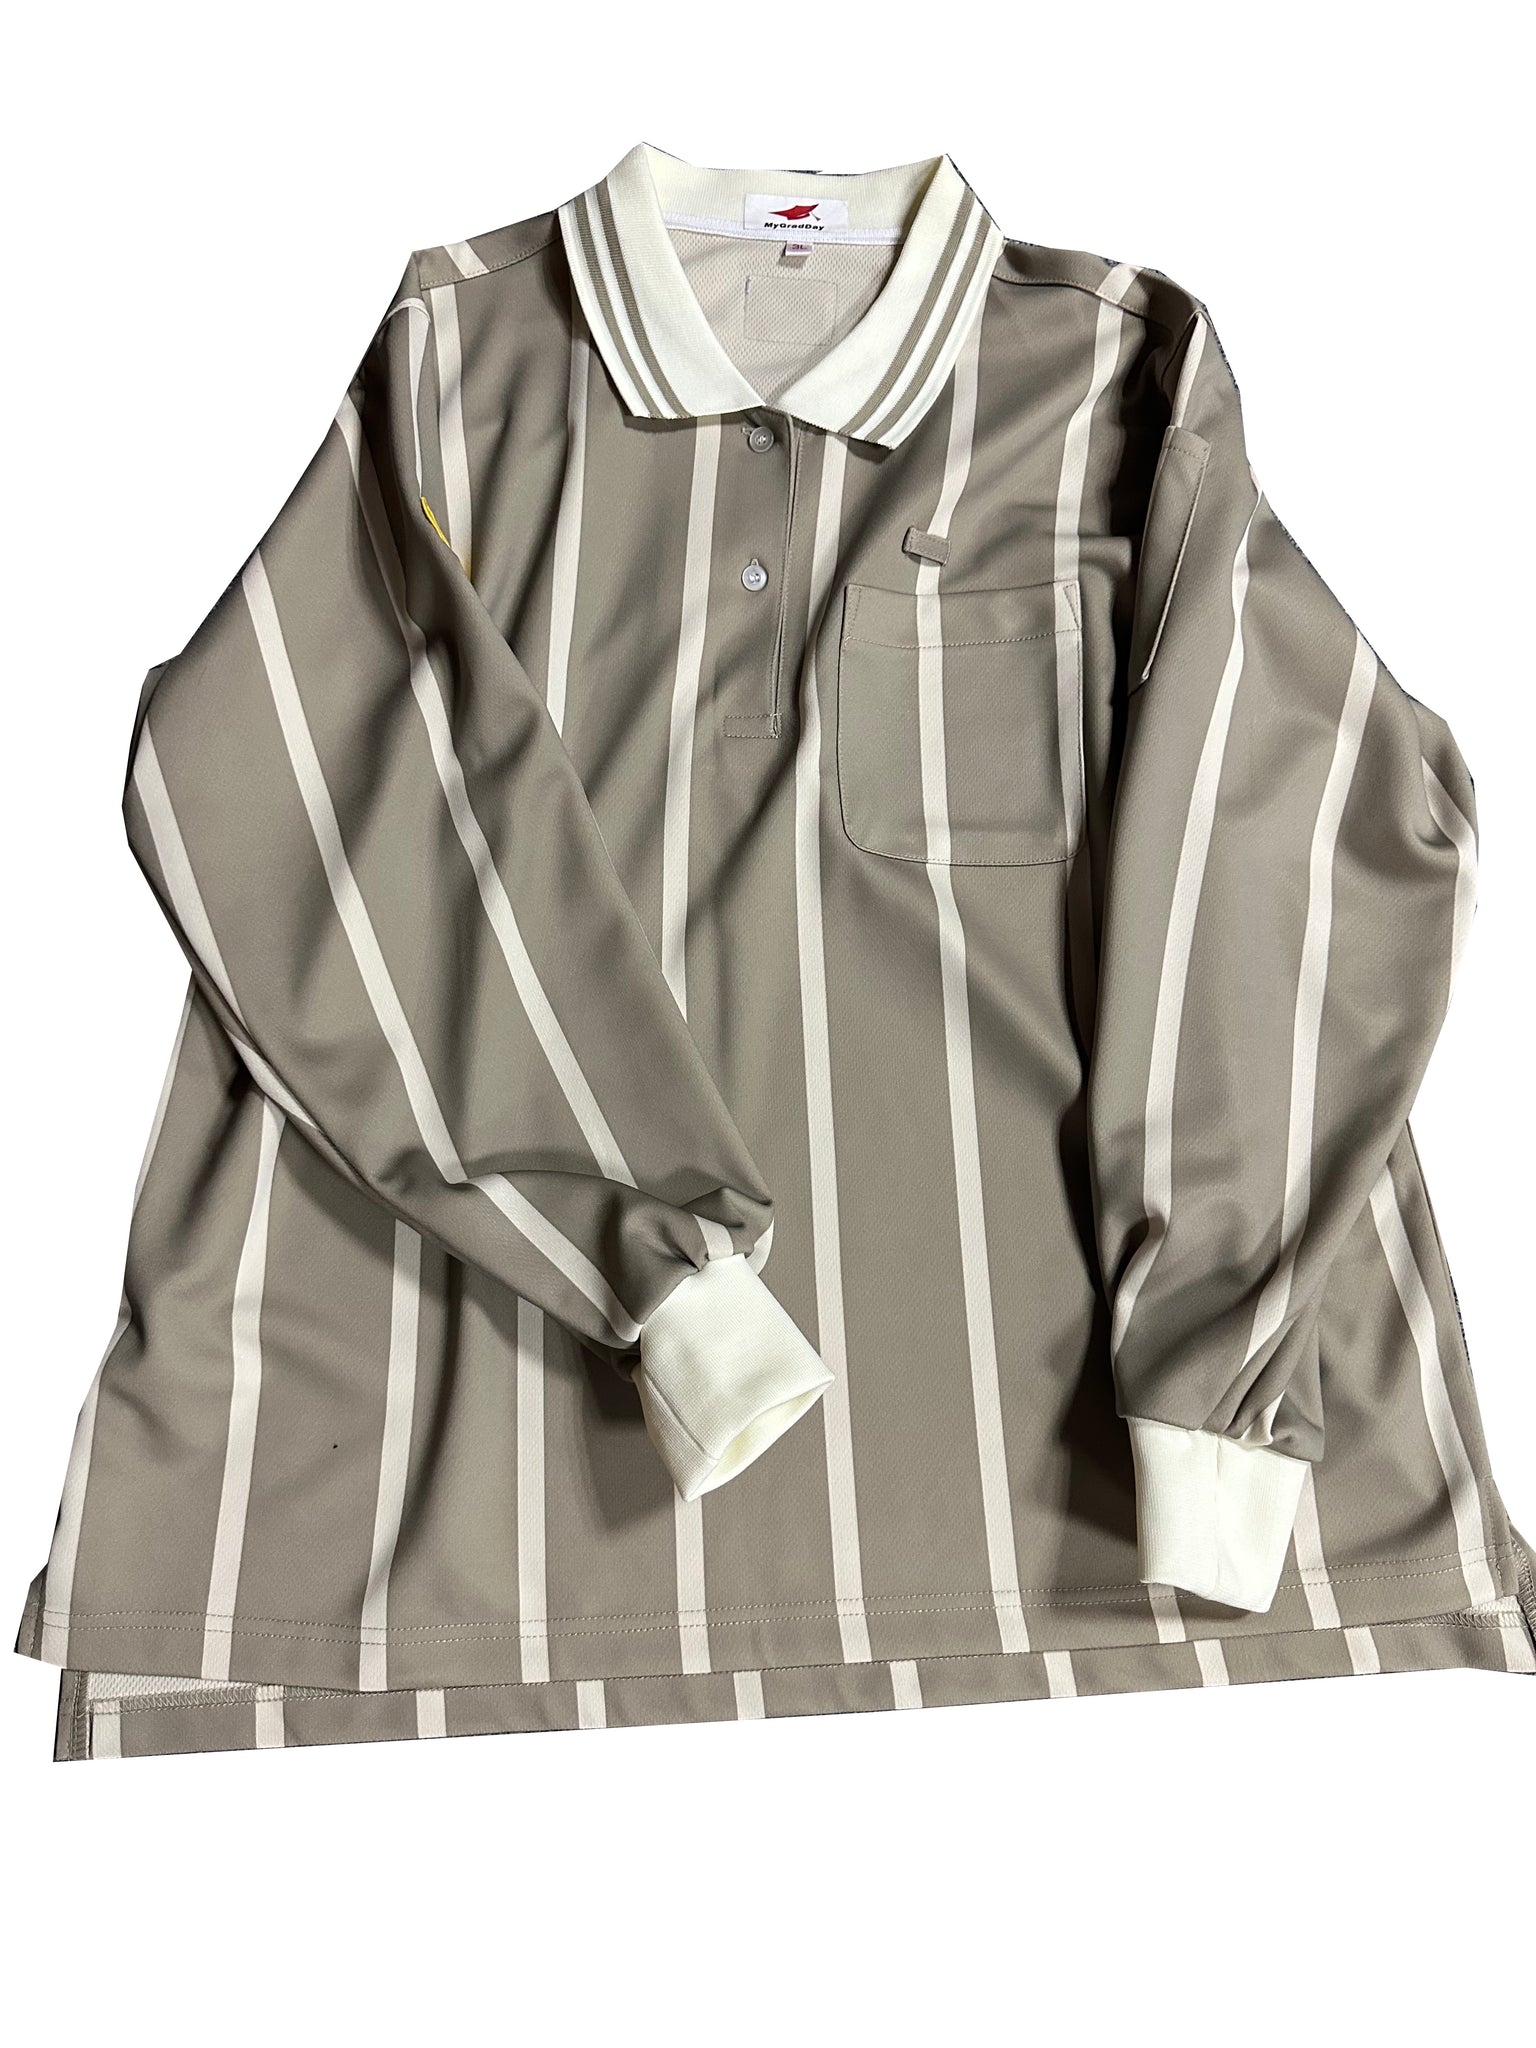 Men's Casual Stylish Short Sleeve Button-Up Striped Dress Shirts Cotton Shirt